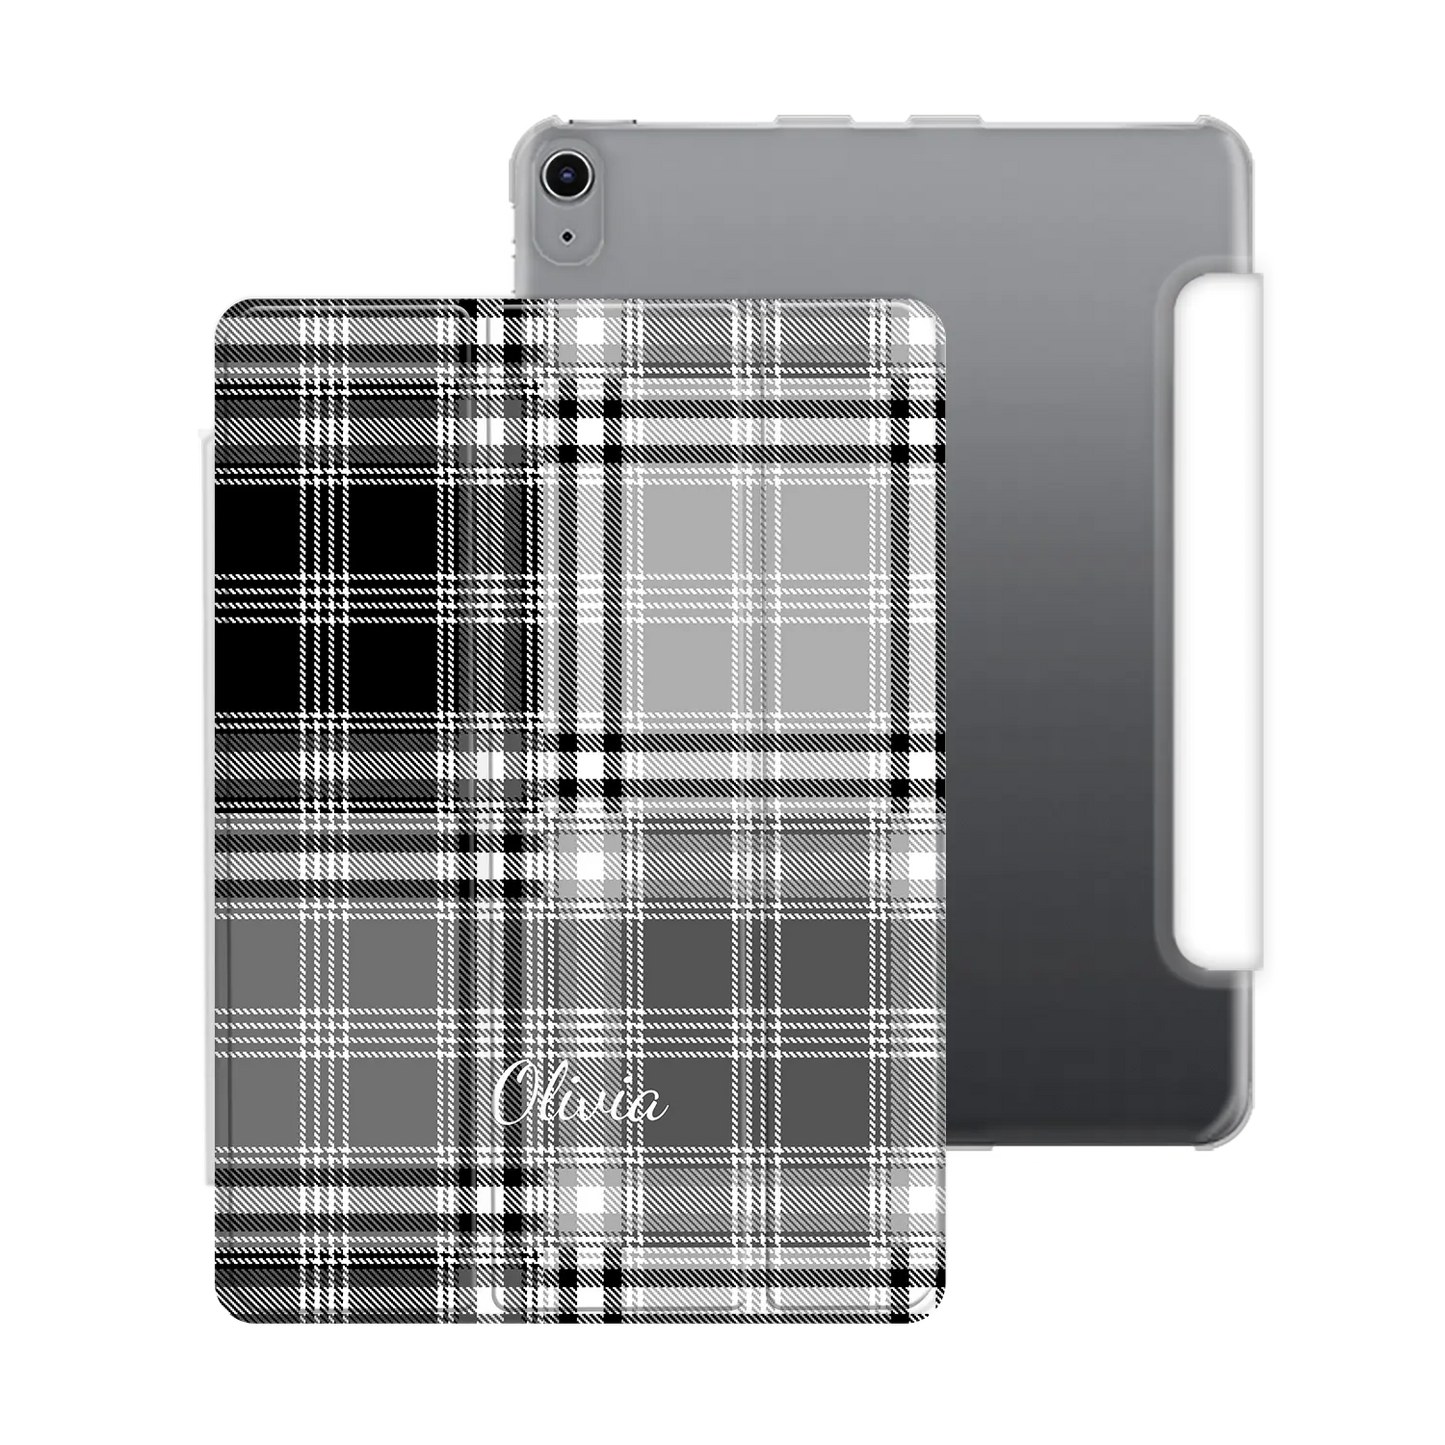 Plaid & Simple - iPad personalizado carcasa